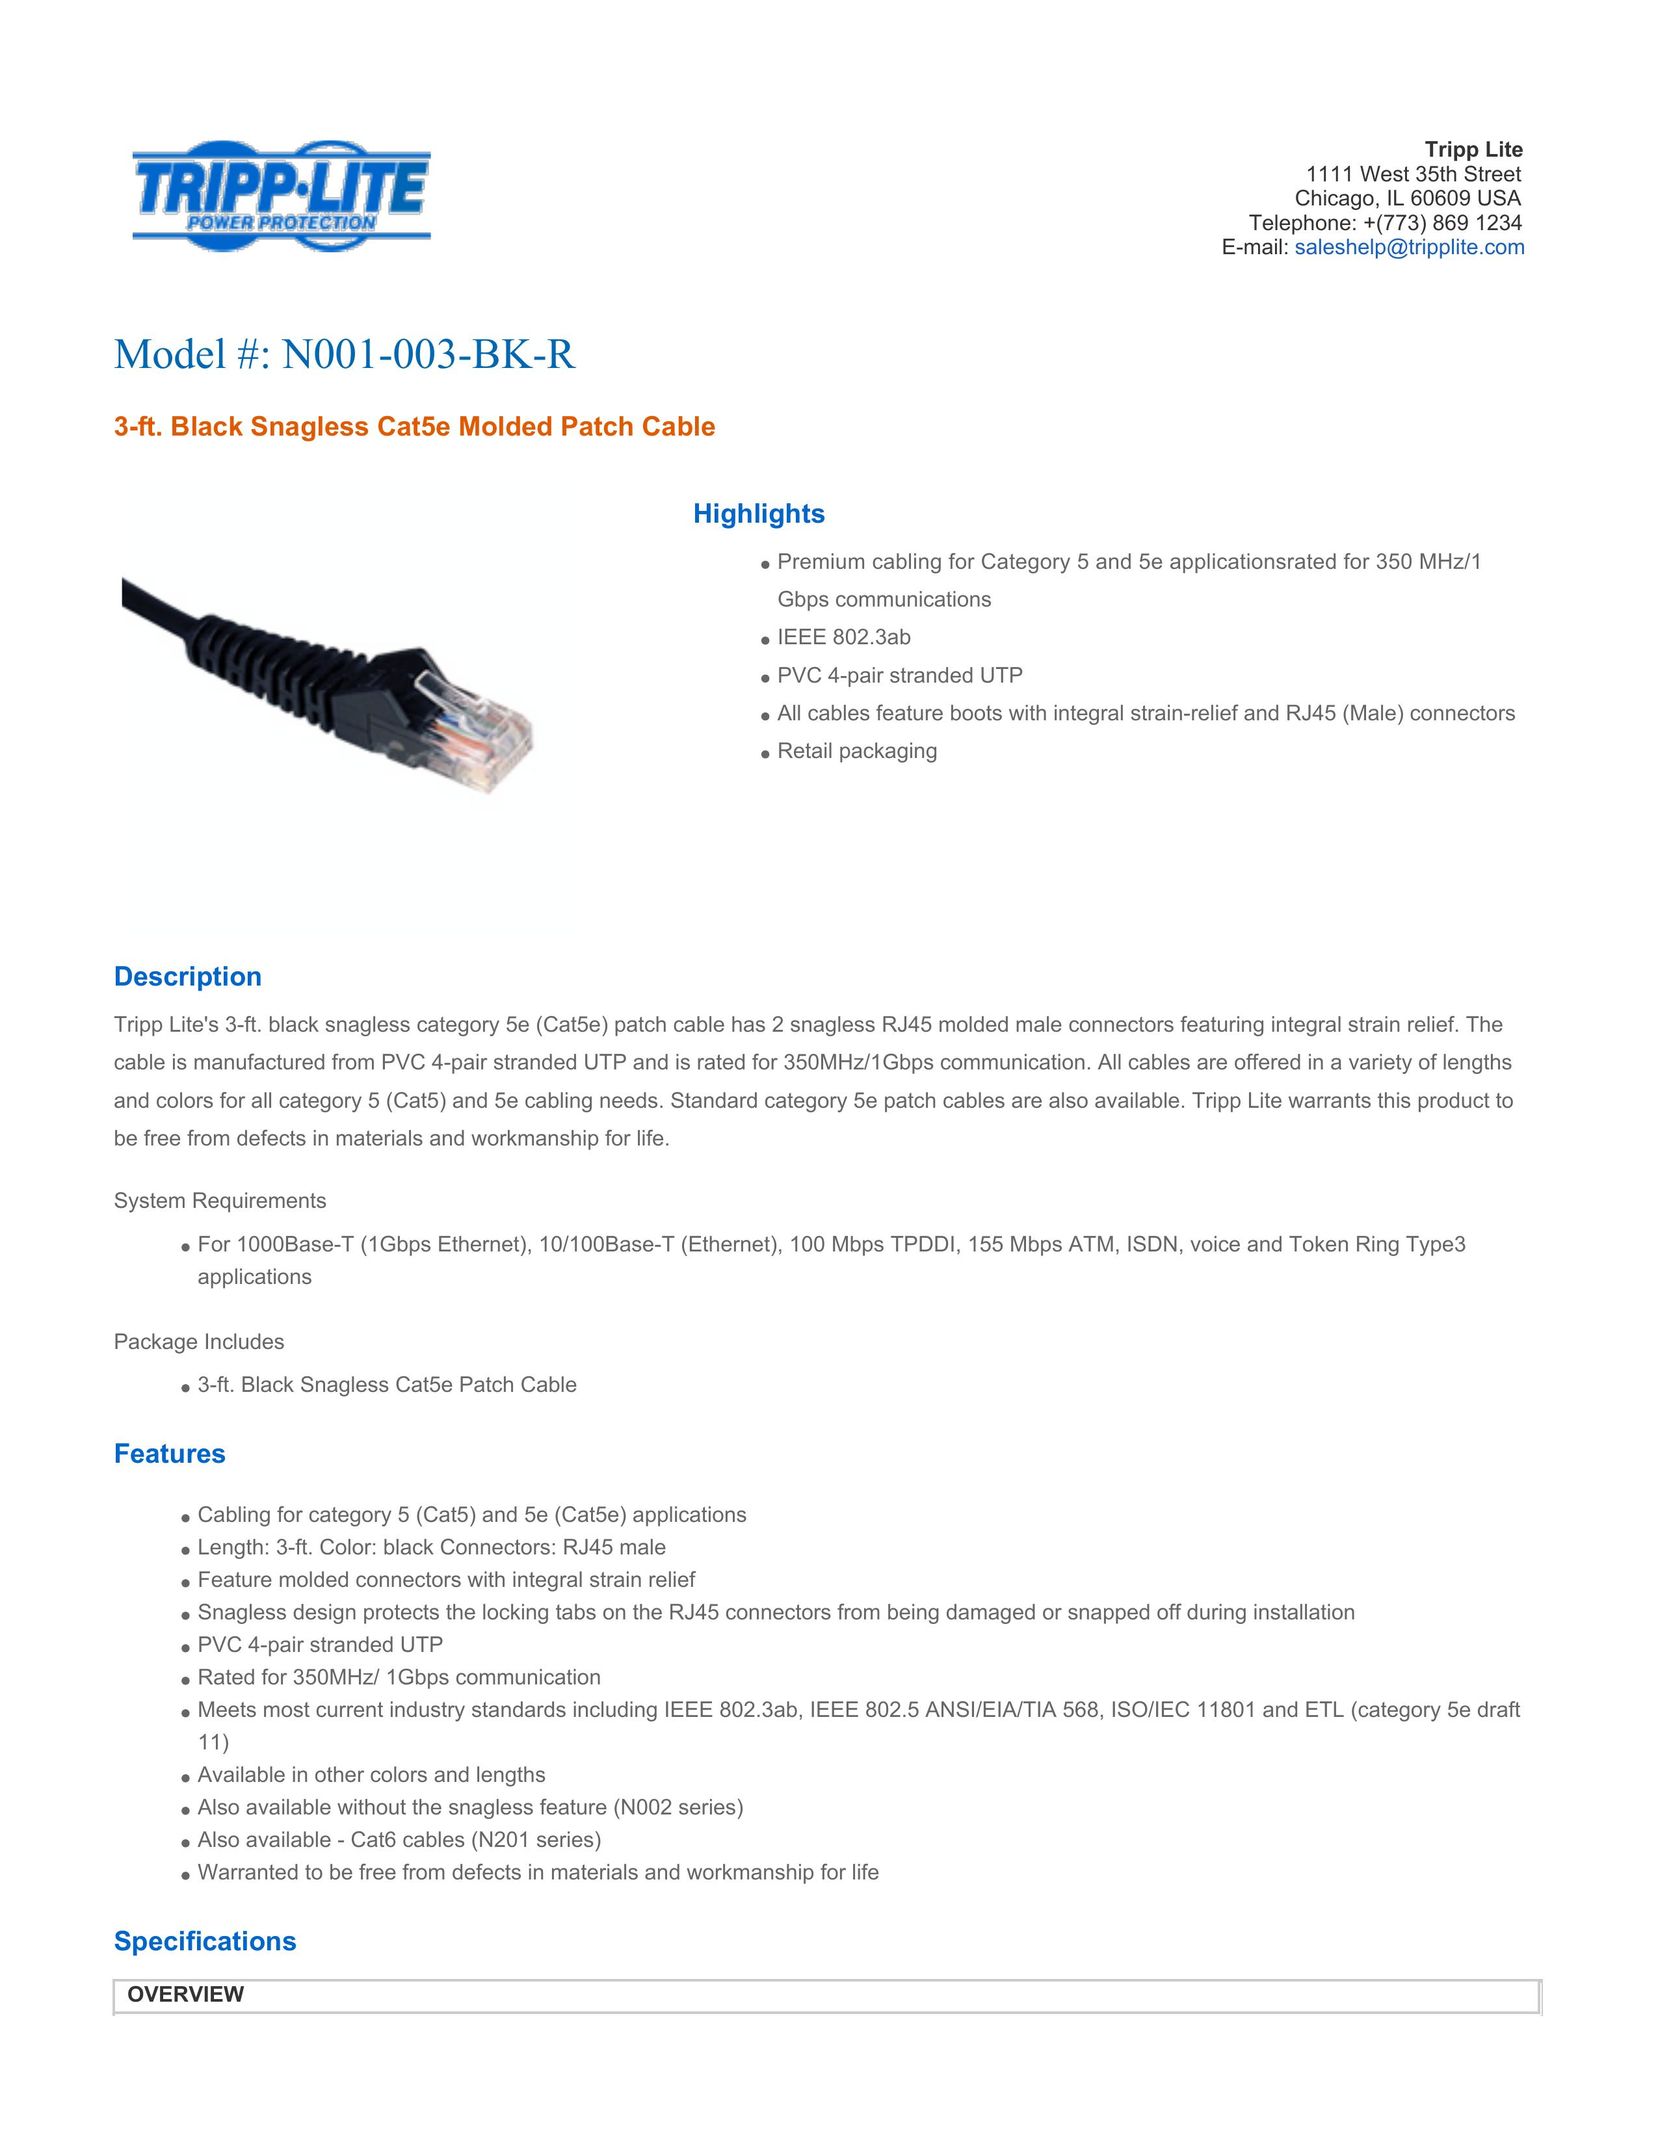 Tripp Lite N001-003-BK-R Network Cables User Manual